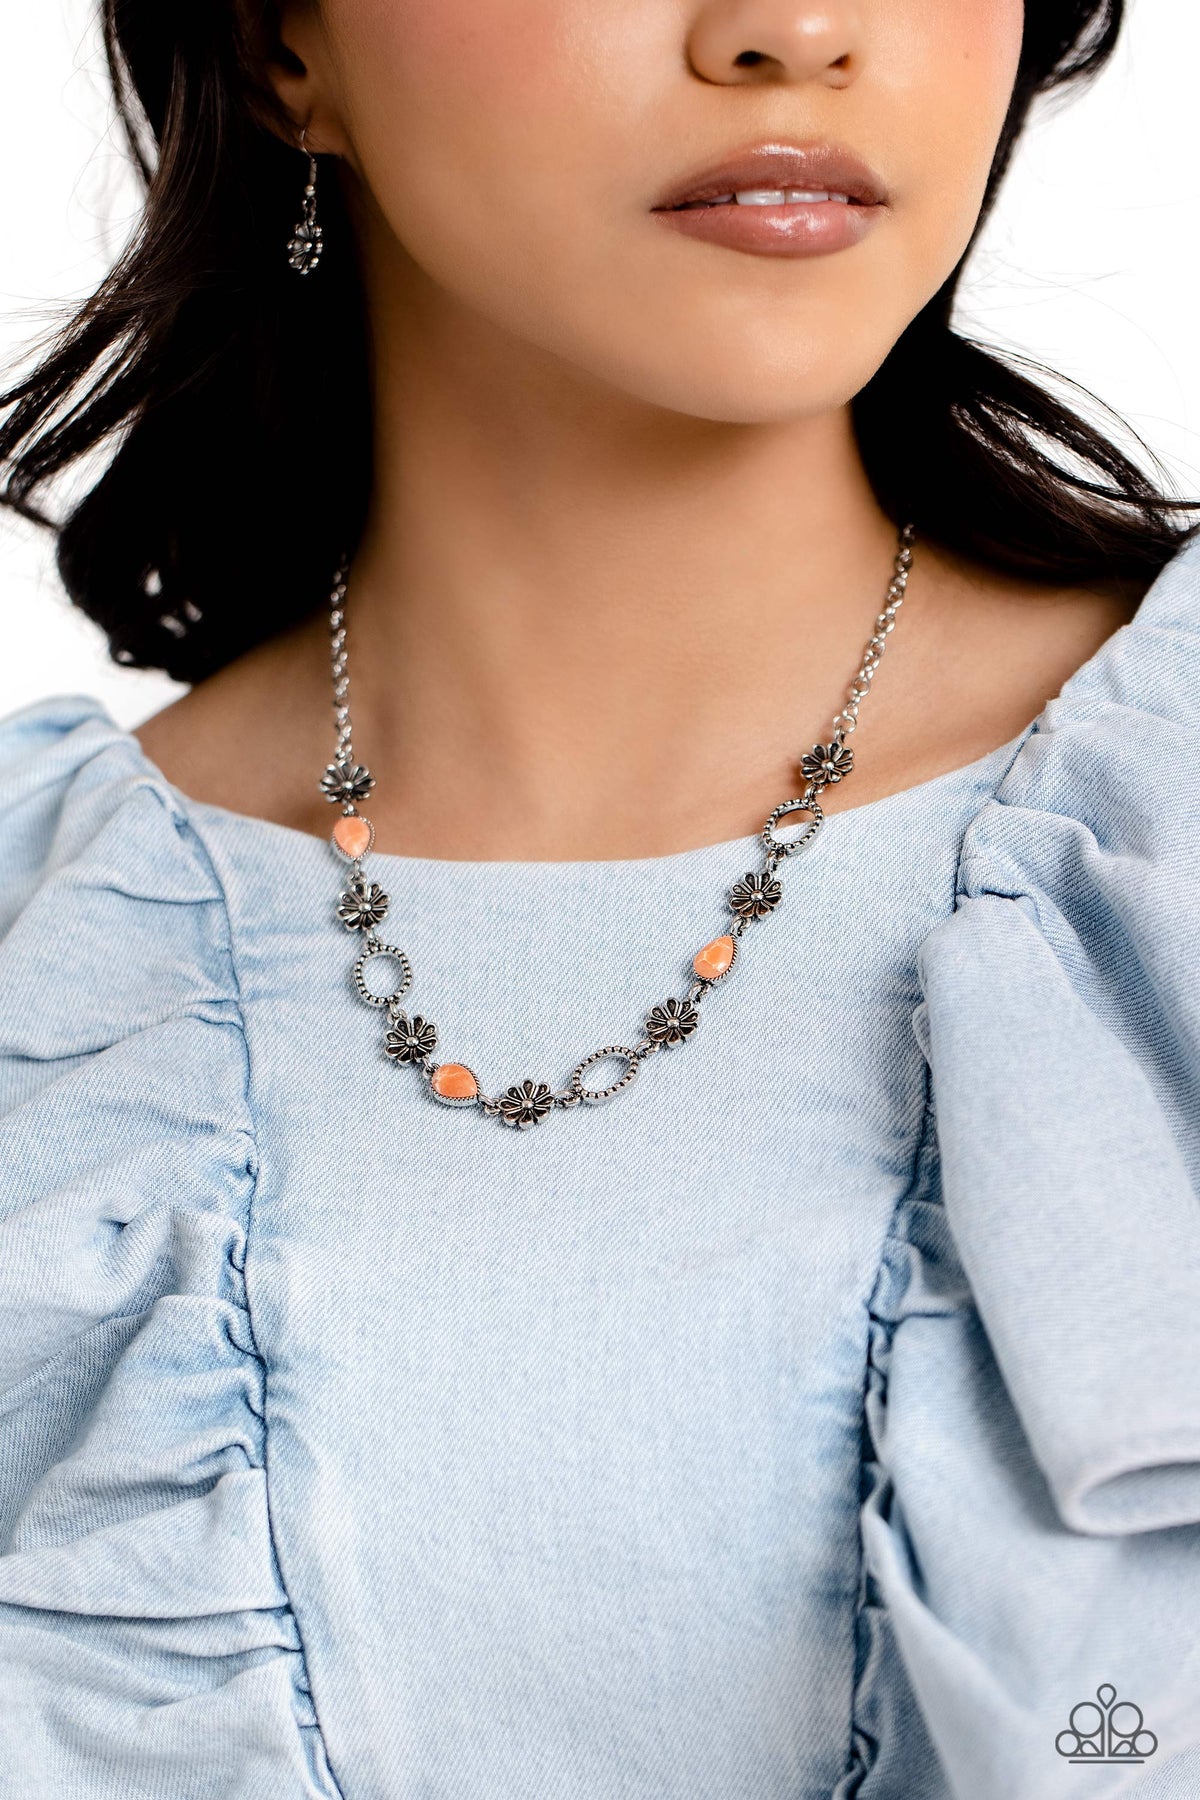 Casablanca Chic Orange Stone Necklace - Paparazzi Accessories-on model - CarasShop.com - $5 Jewelry by Cara Jewels